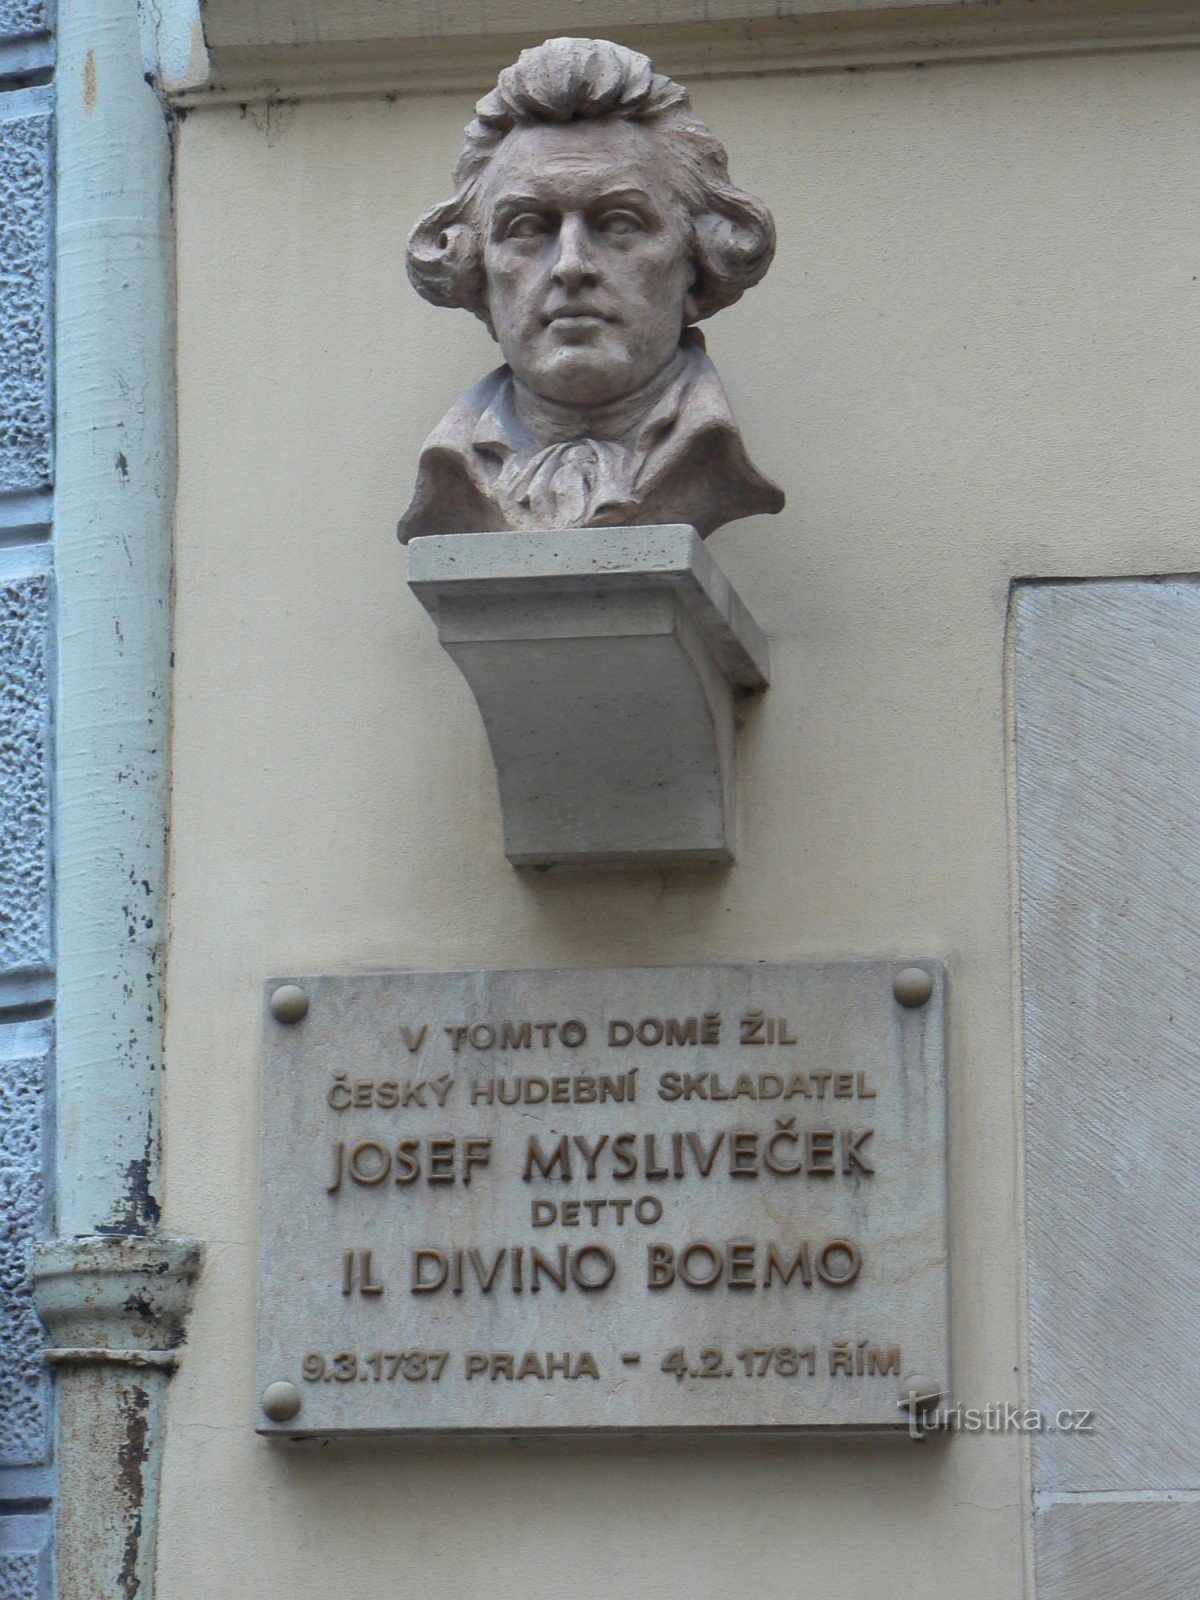 Josef Myslivecek